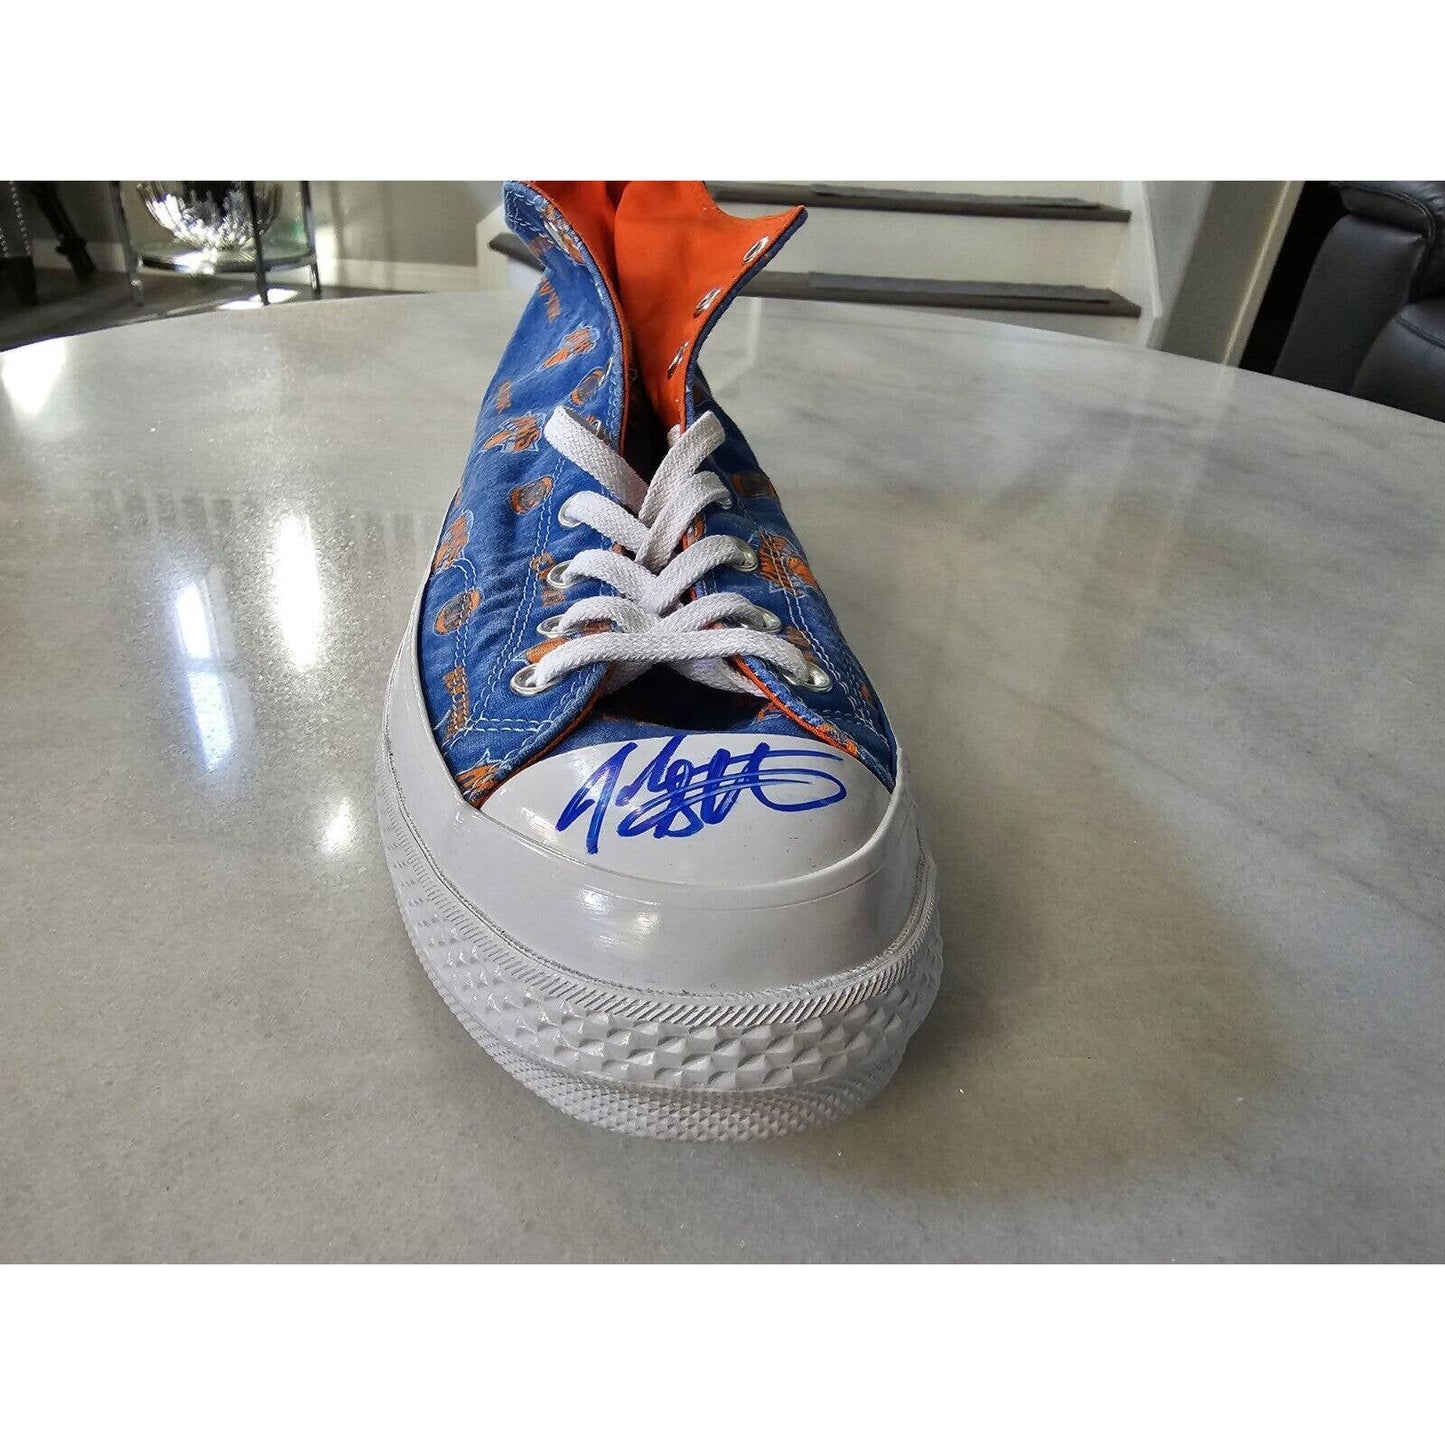 John Starks Autographed/Signed Shoe Sneaker Chuck Taylor New York Knicks NY